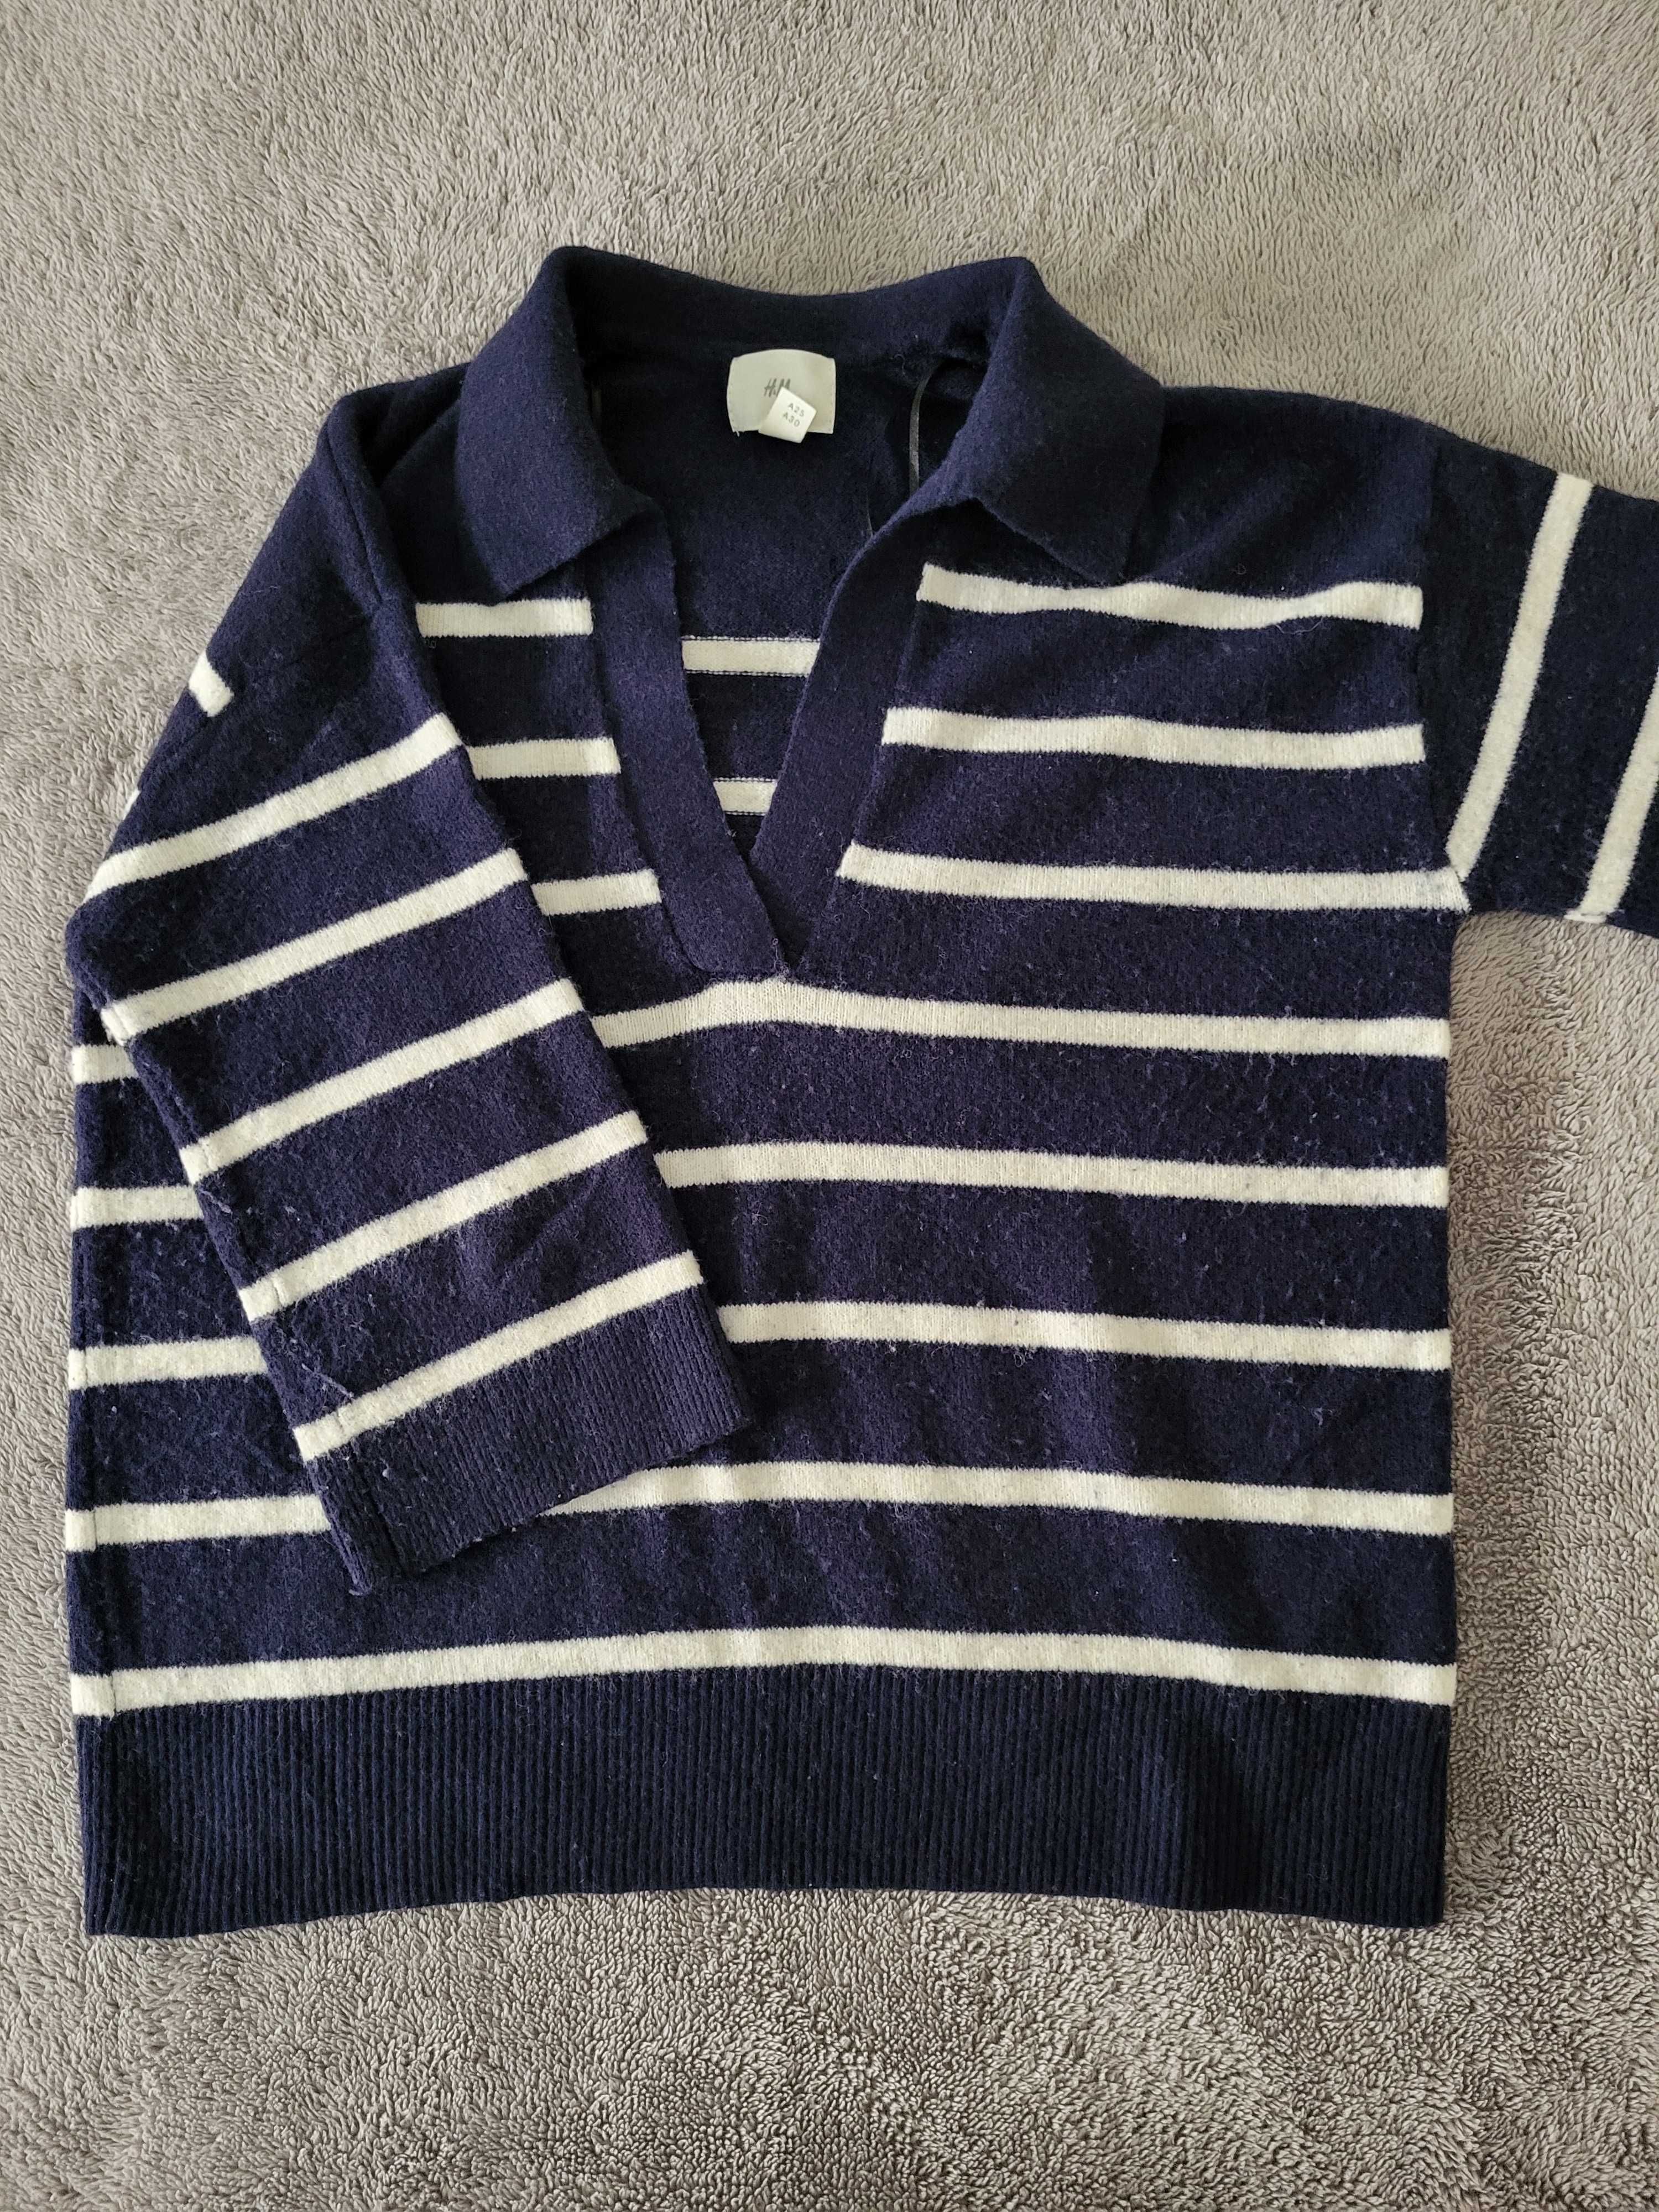 Stripes sweater h&m